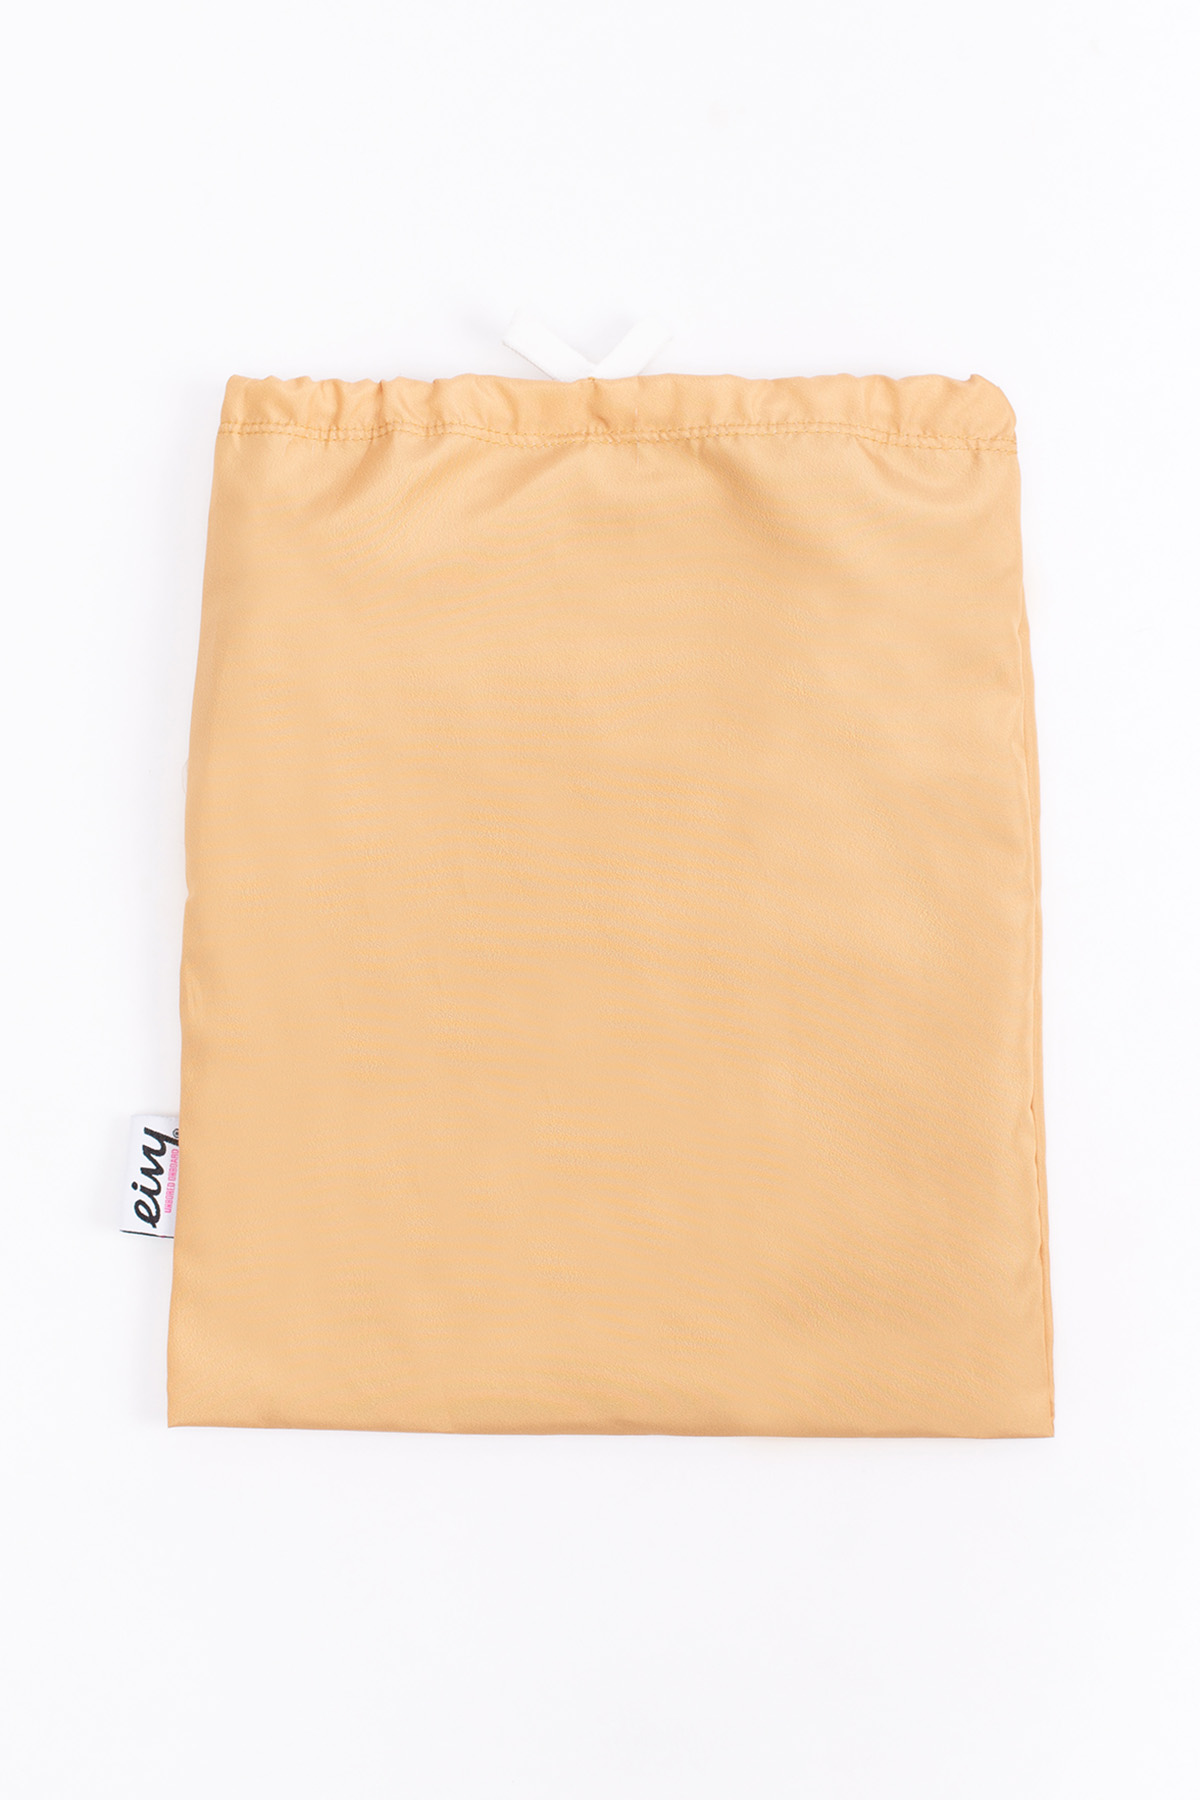 Harlem Rib Travel Pants - Faded Amber | XL